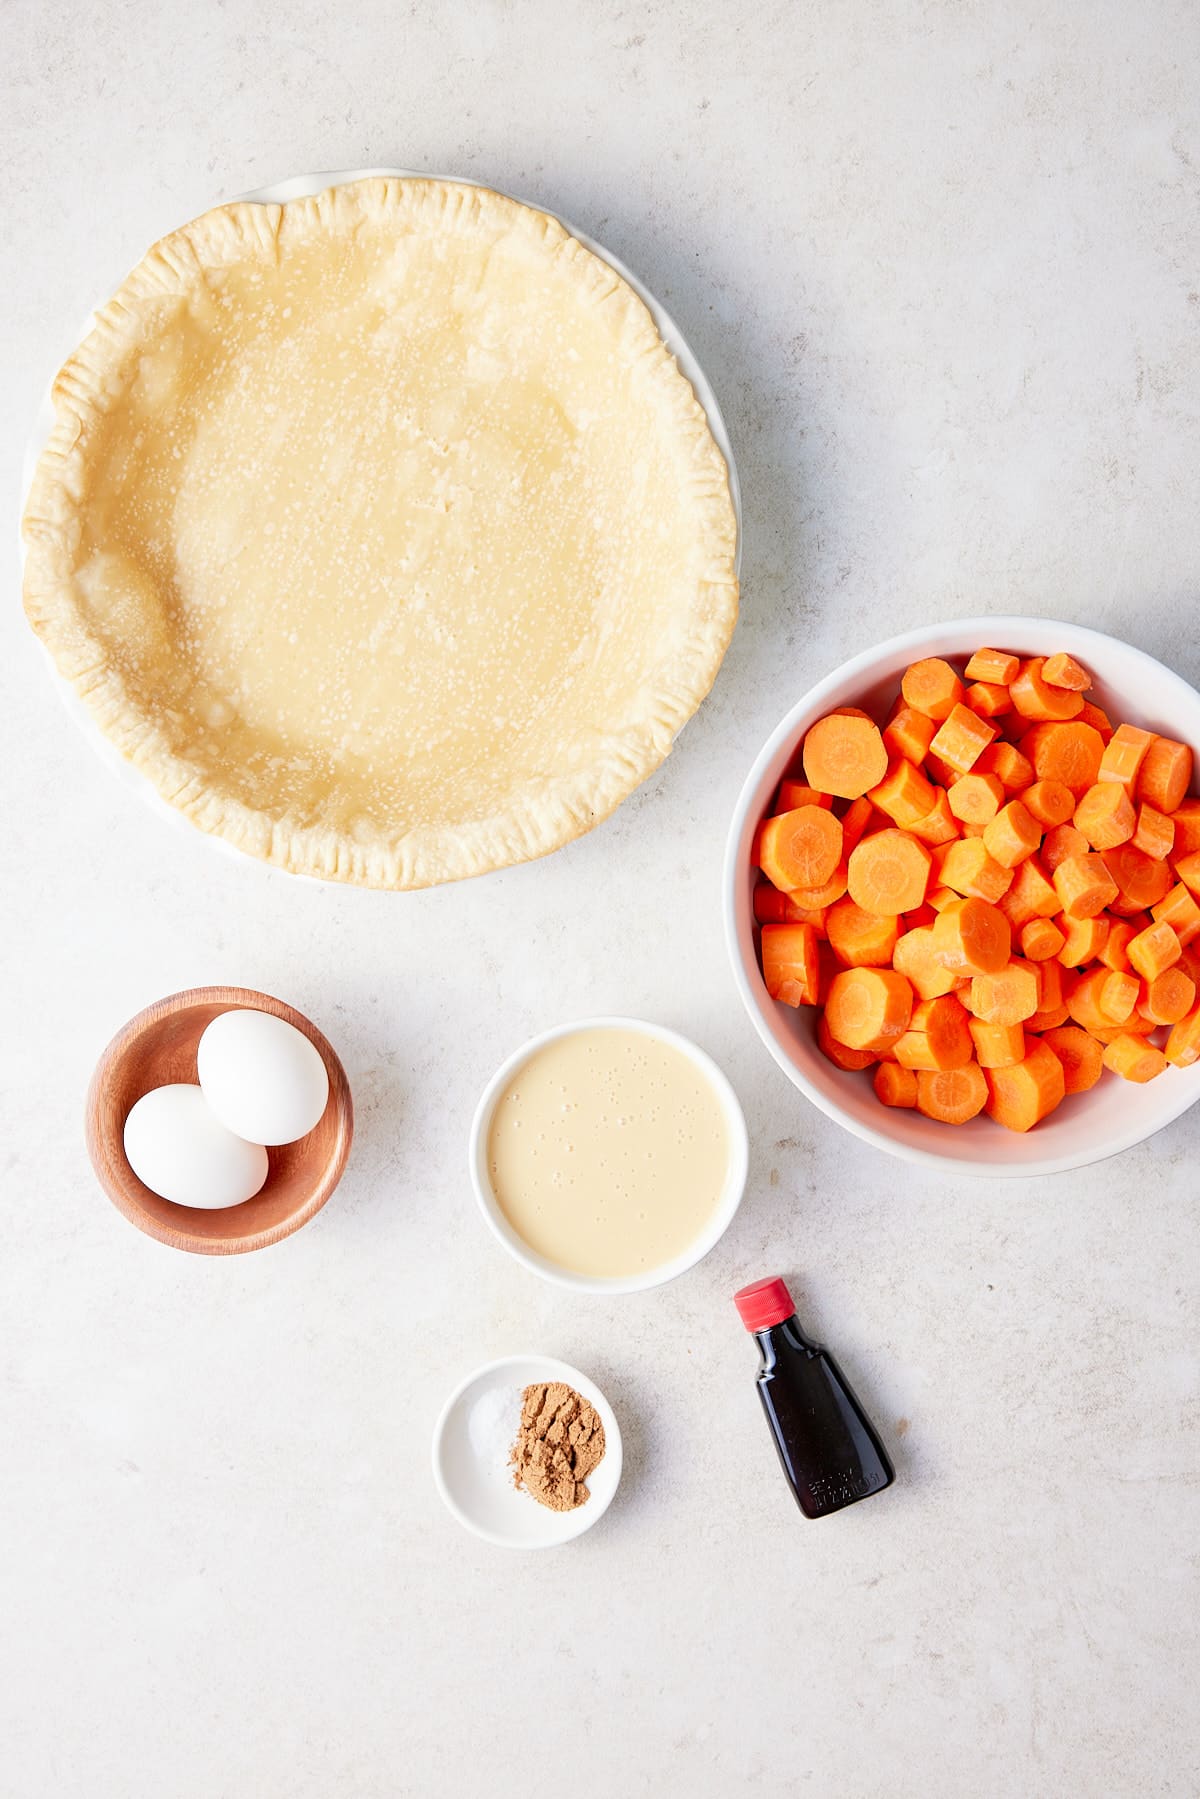 Carrot pie recipe ingredients